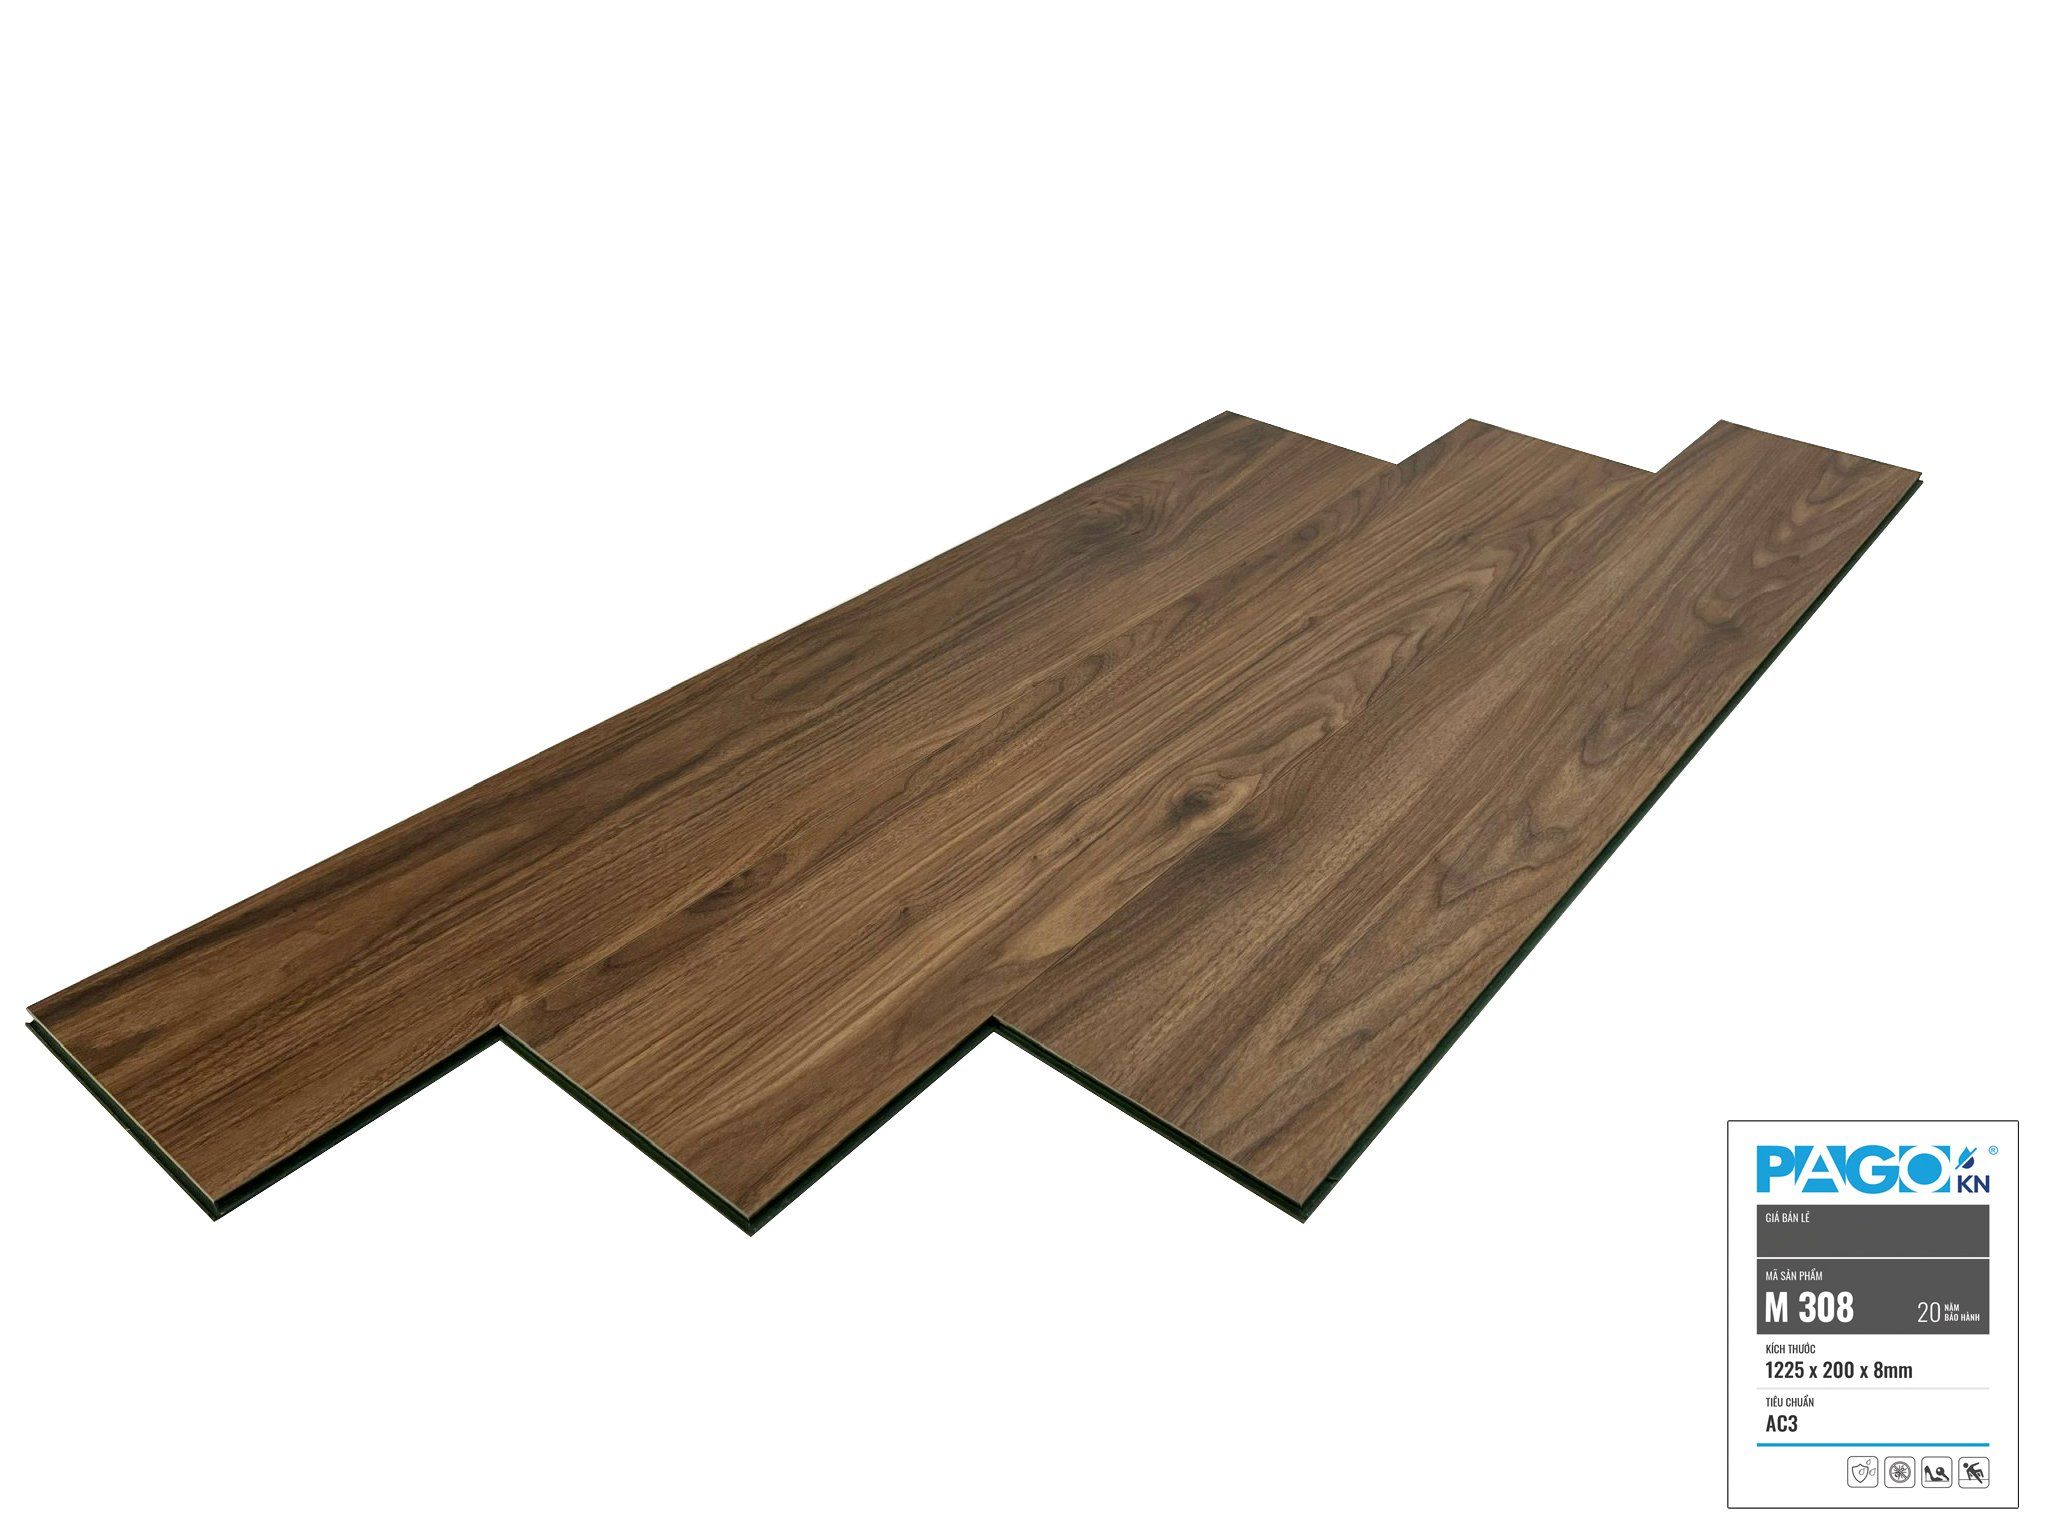  Sàn gỗ Pago – M308 